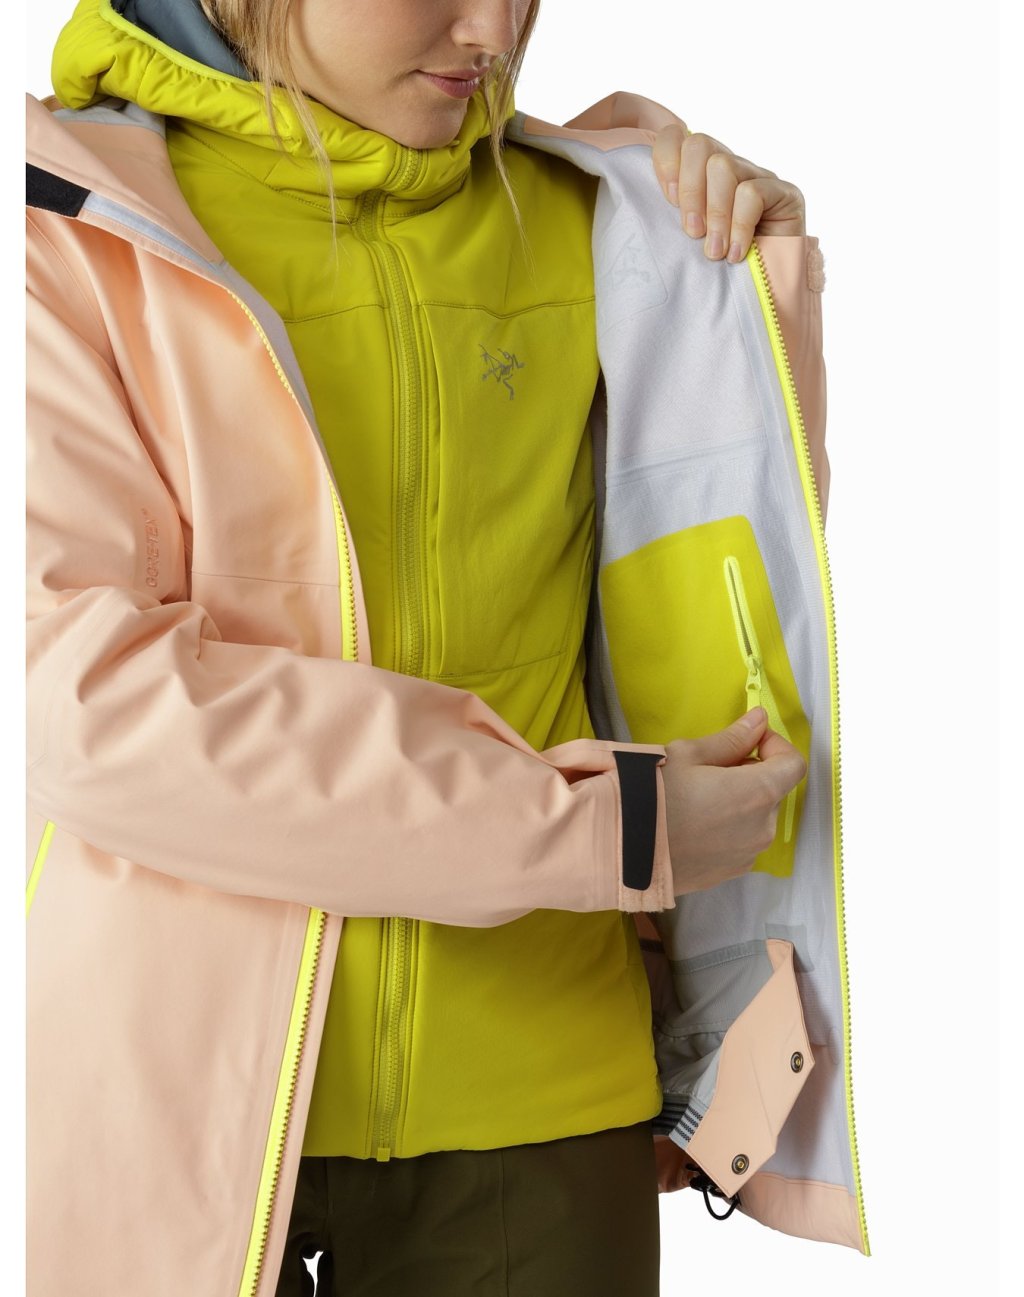 Sentinel AR jacket - inside pocket with zipper